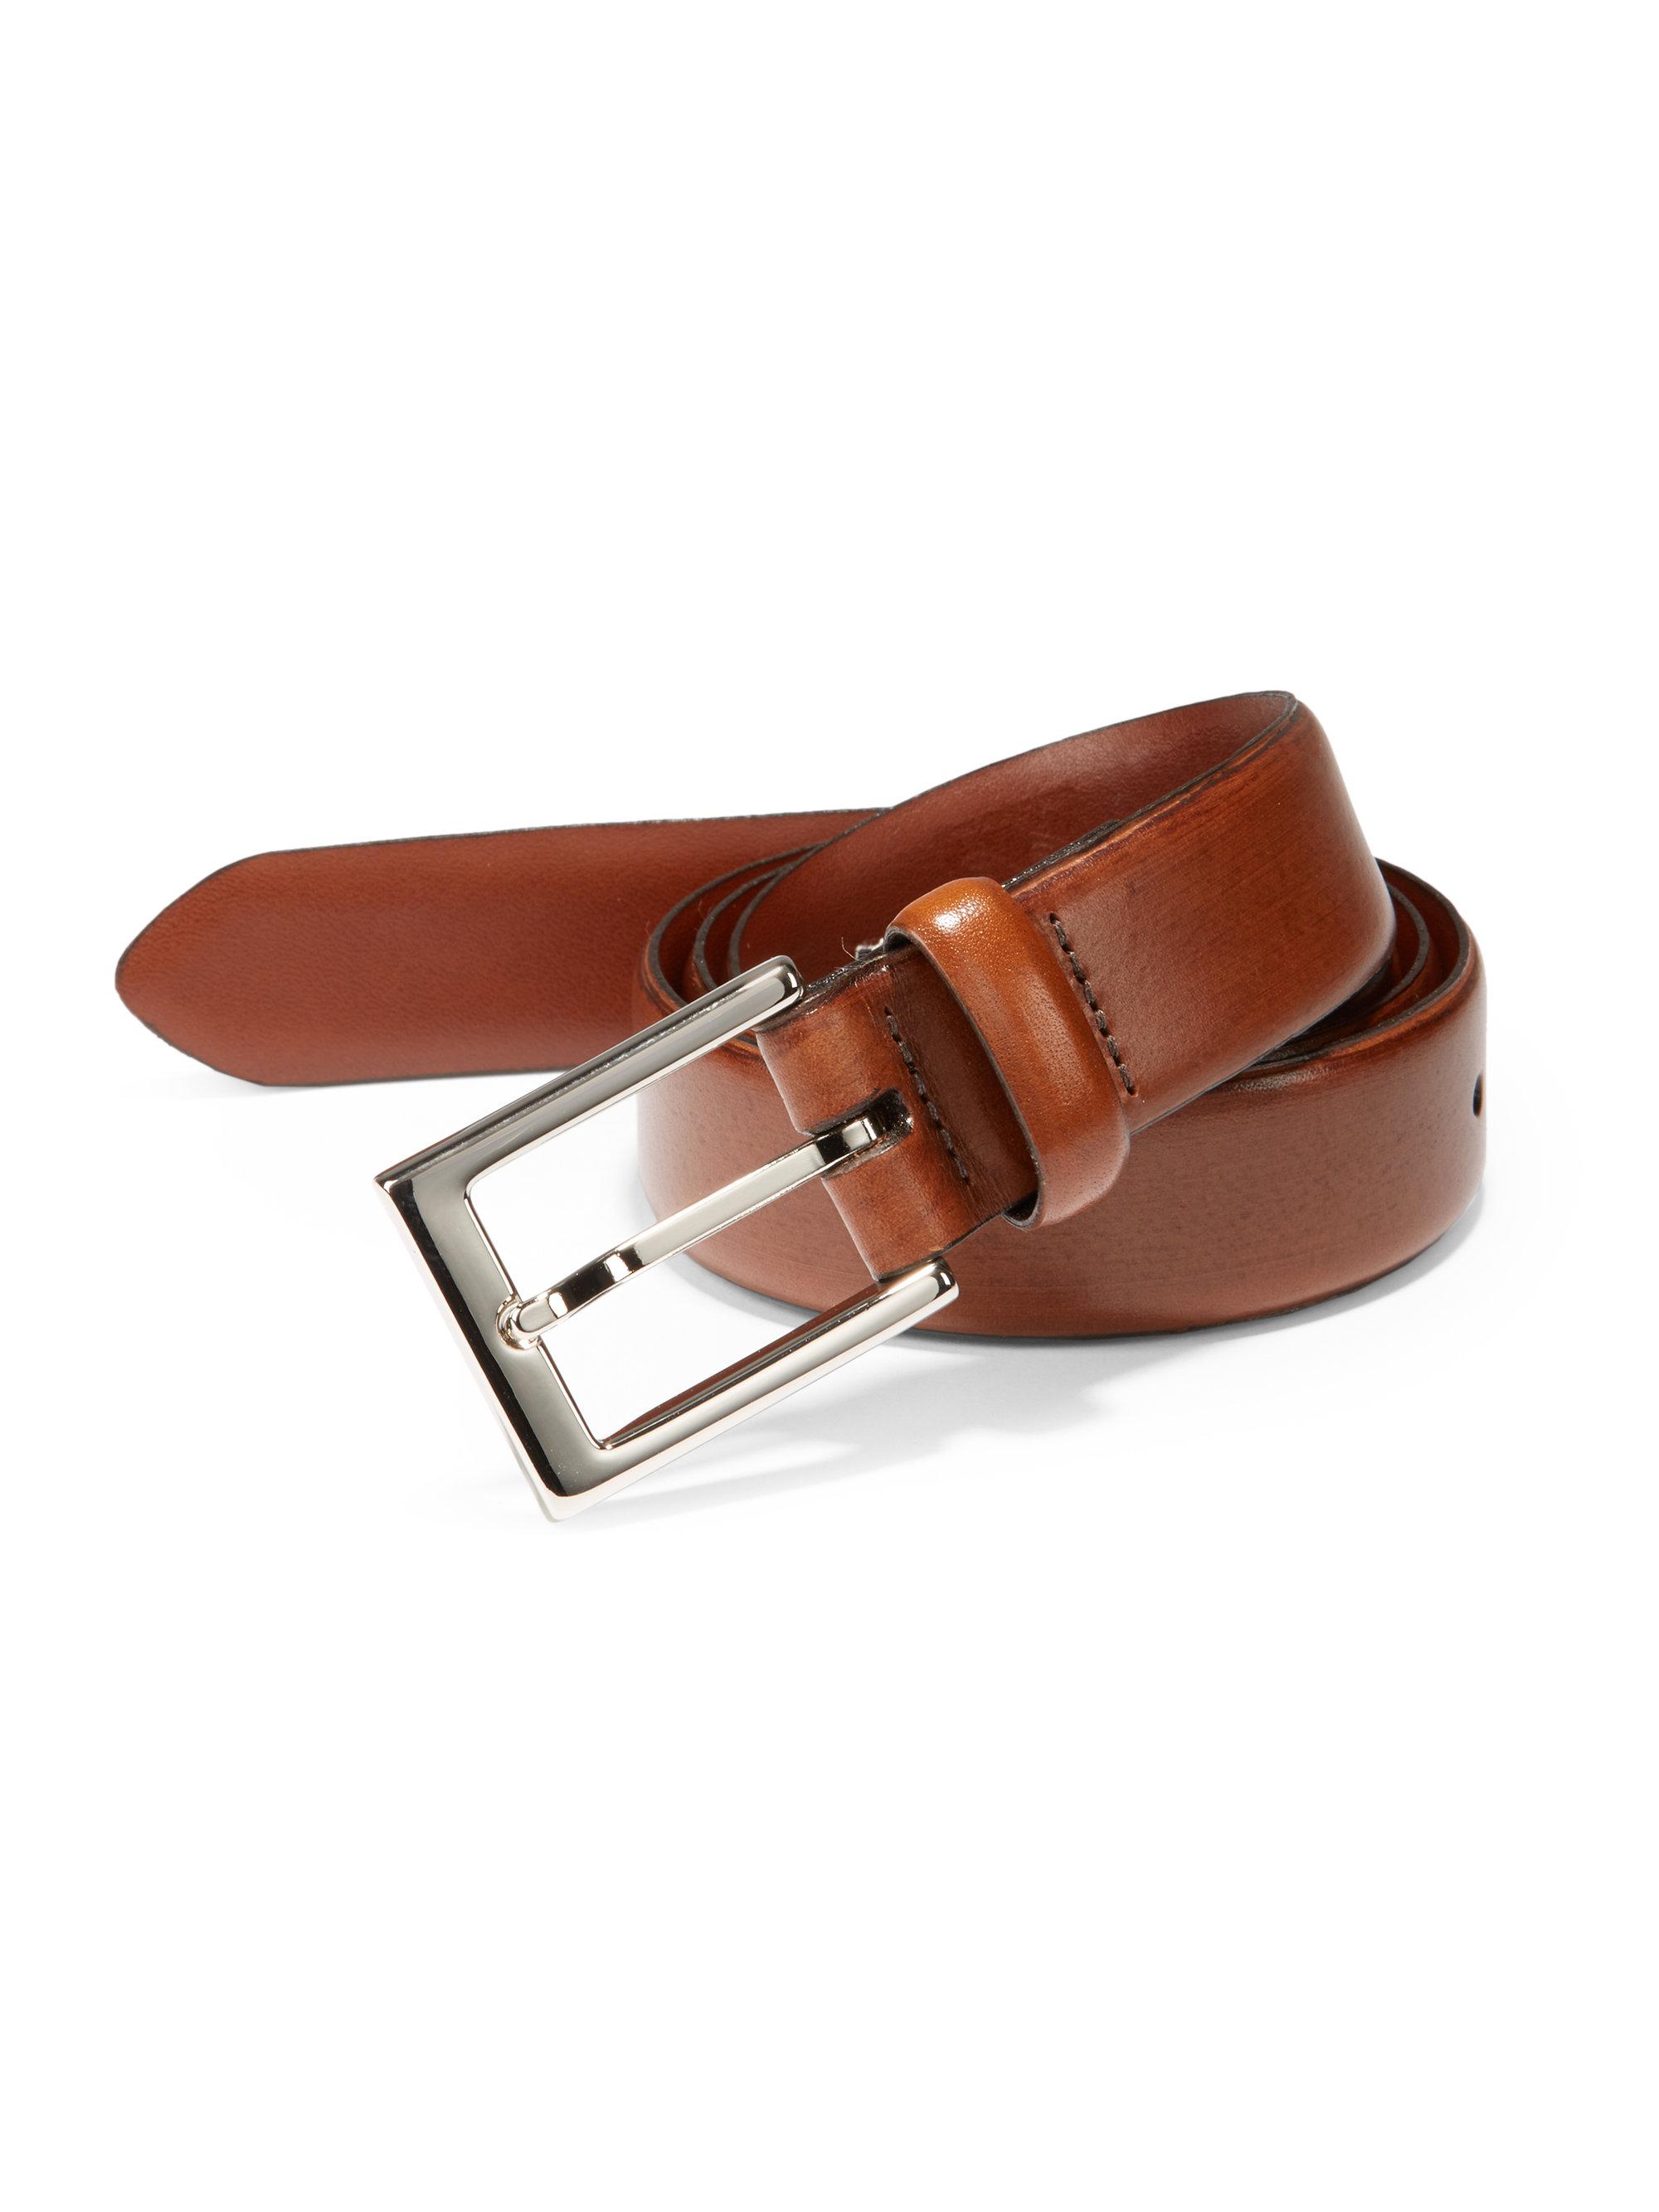 Lyst - Saks Fifth Avenue Leather Belt in Brown for Men